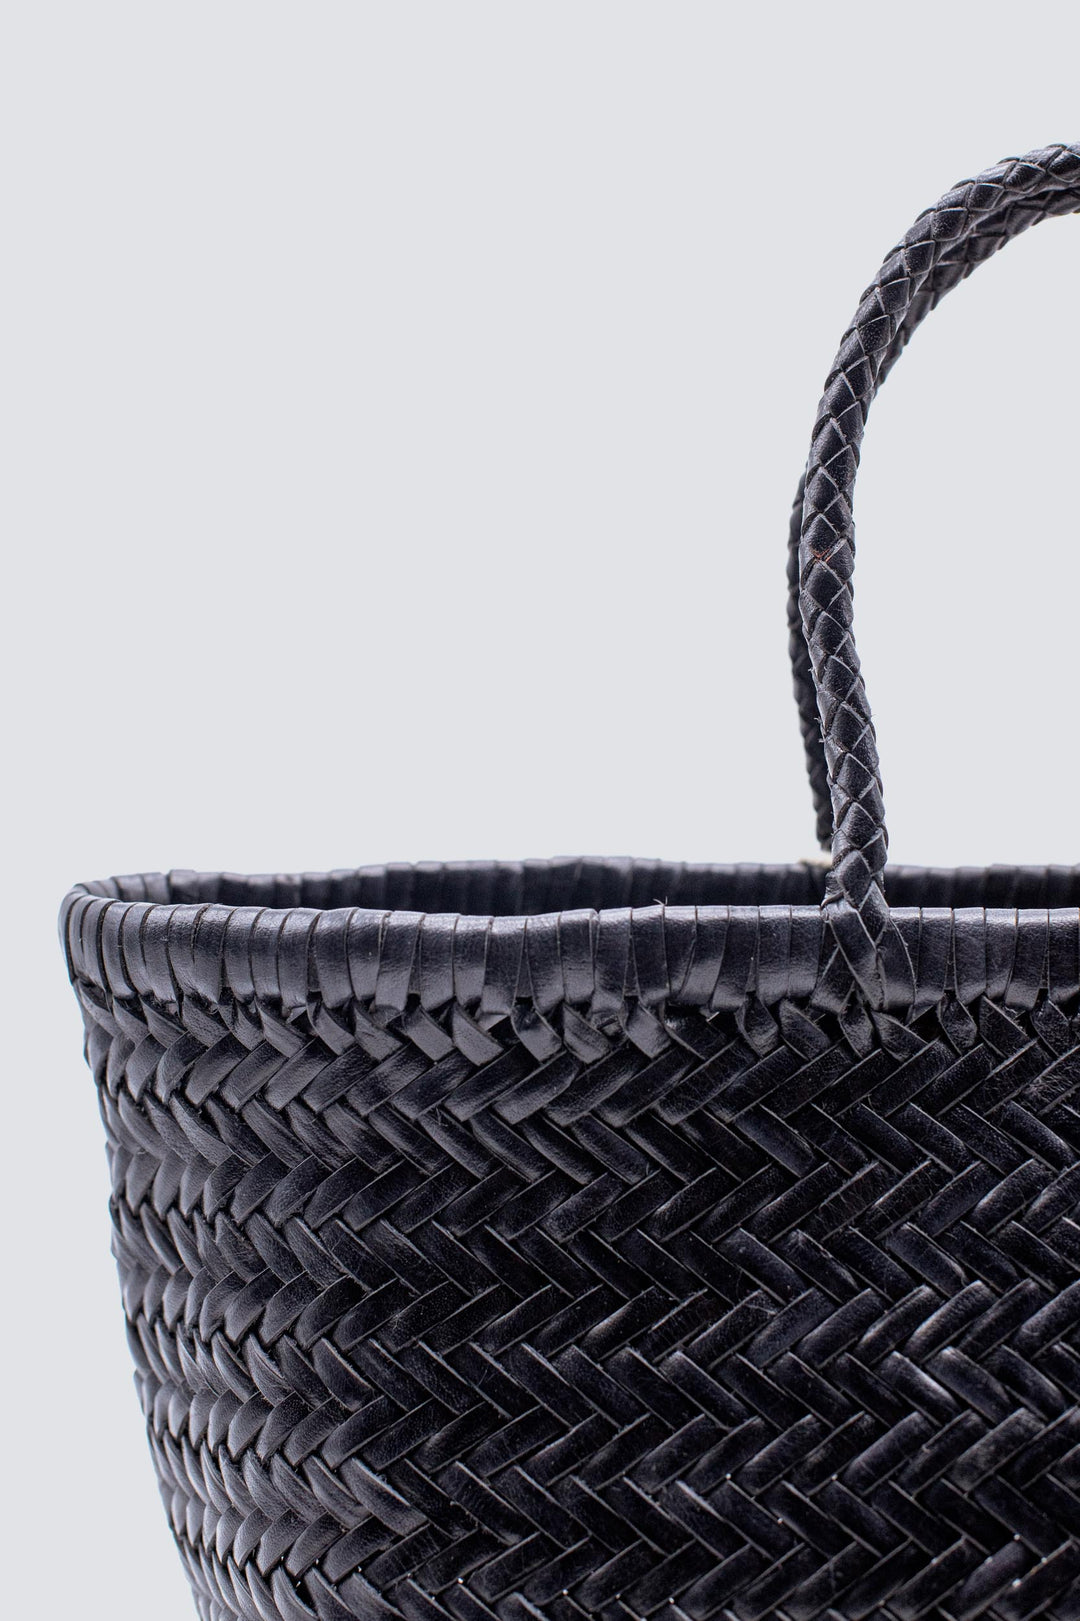 Dragon Diffusion woven leather bag handmade - Triple Jump Small Black